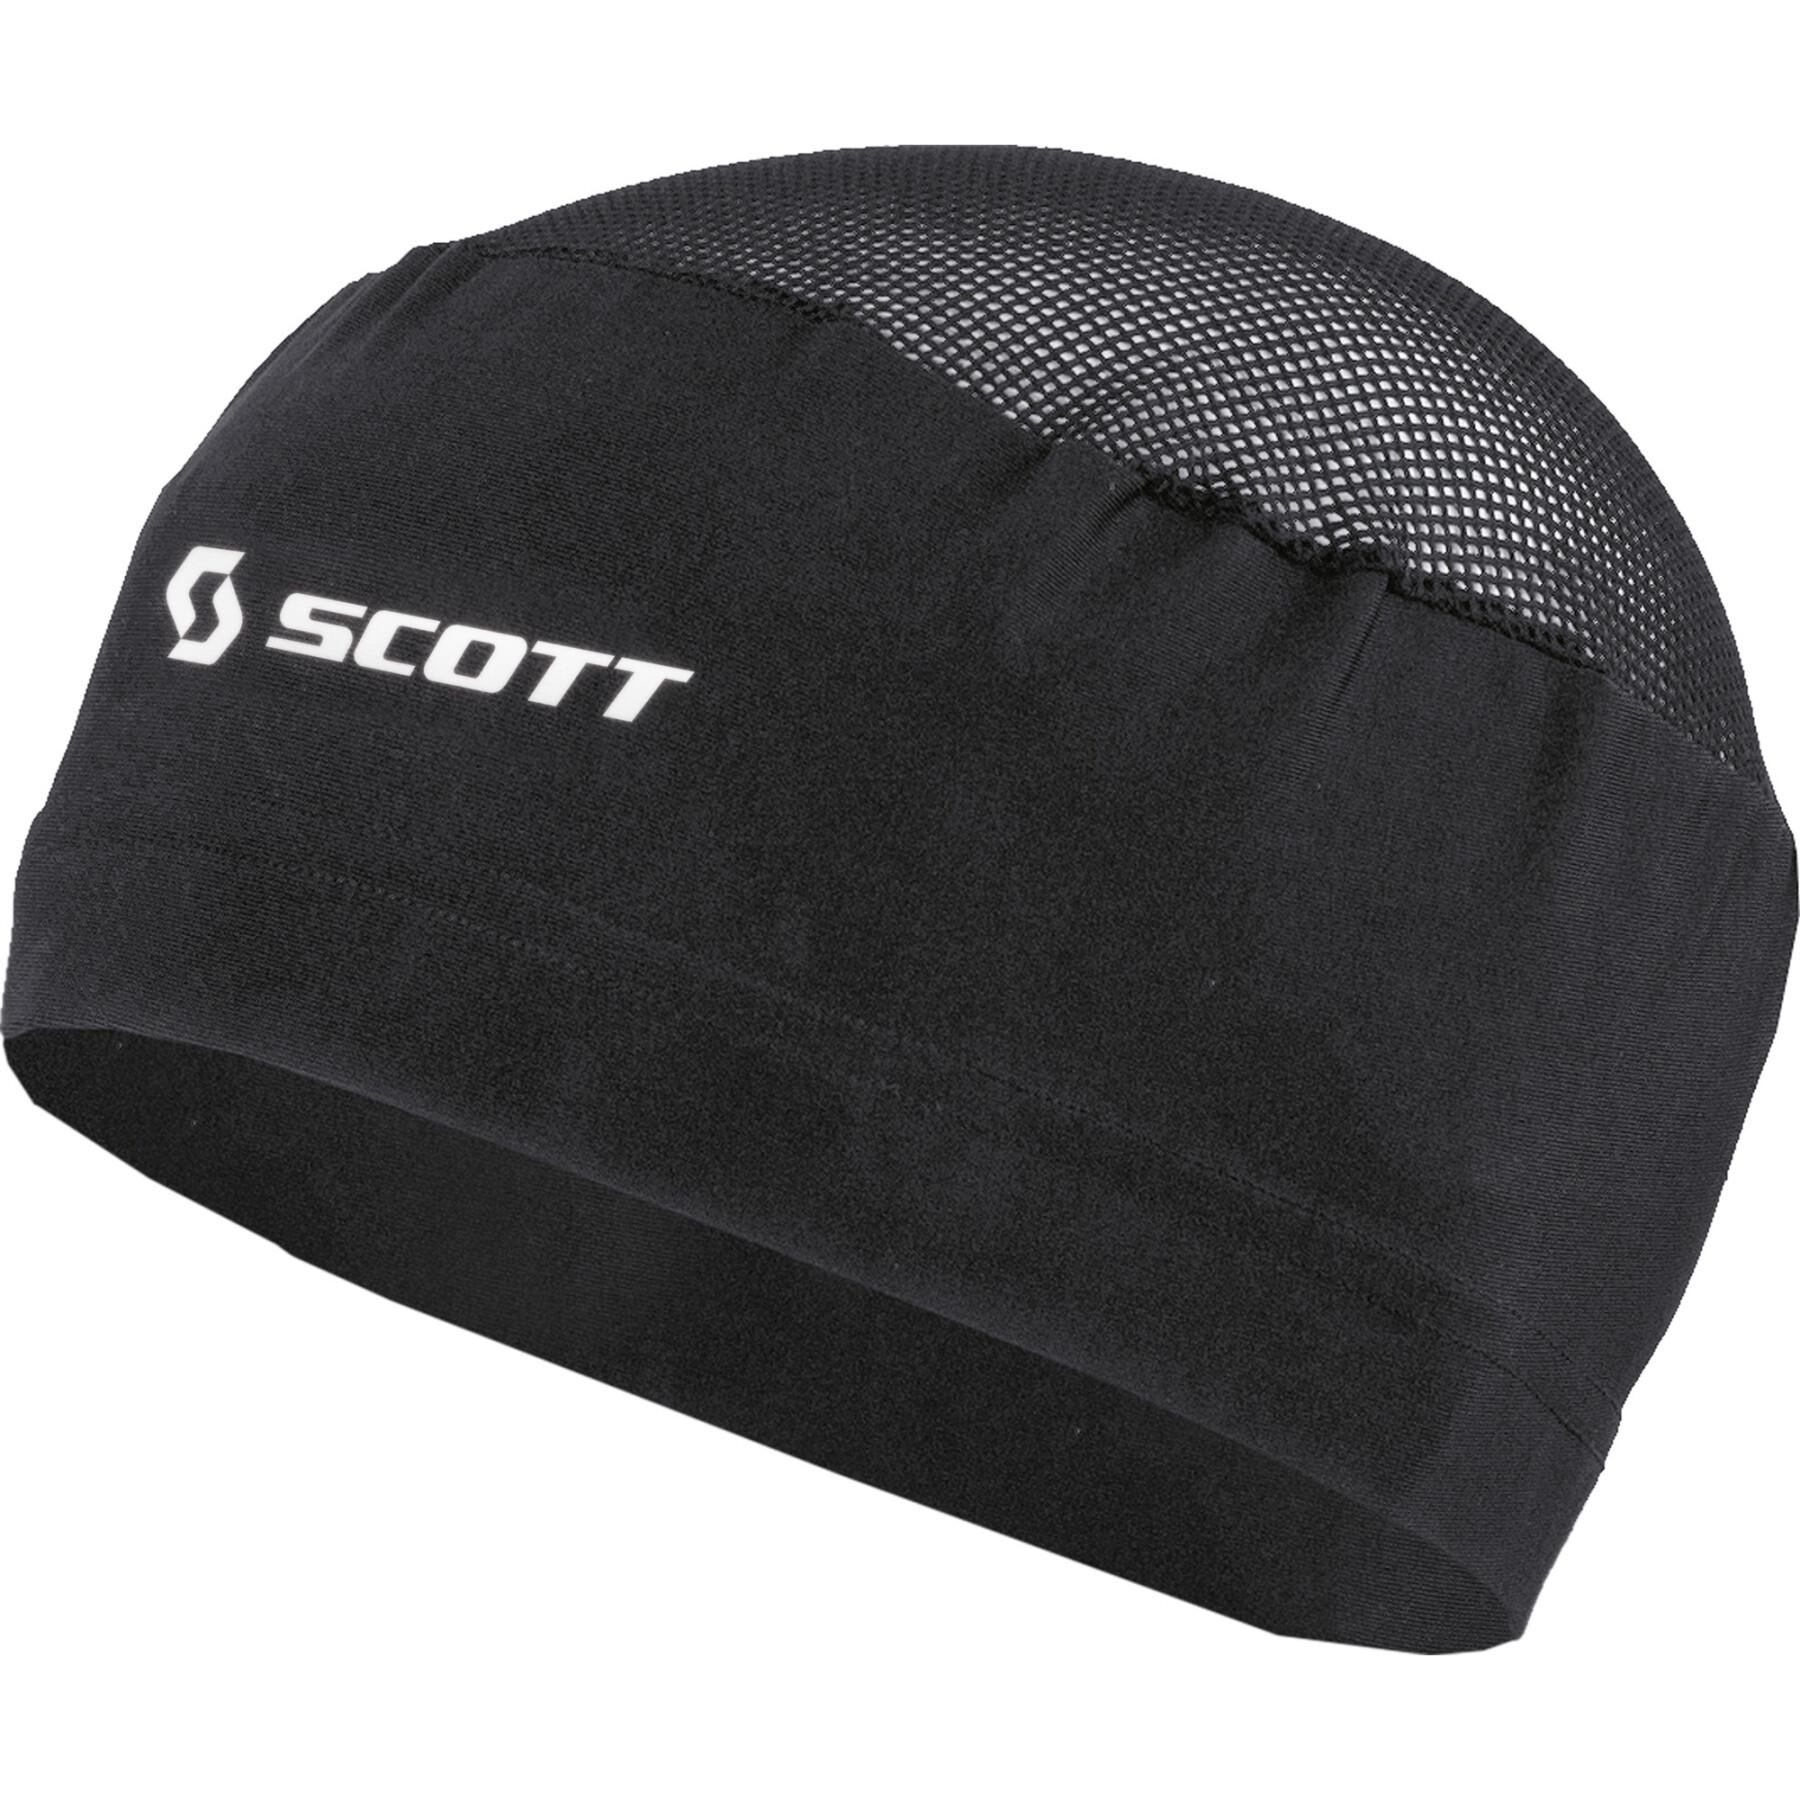 Set of 3 sweat caps Scott basic